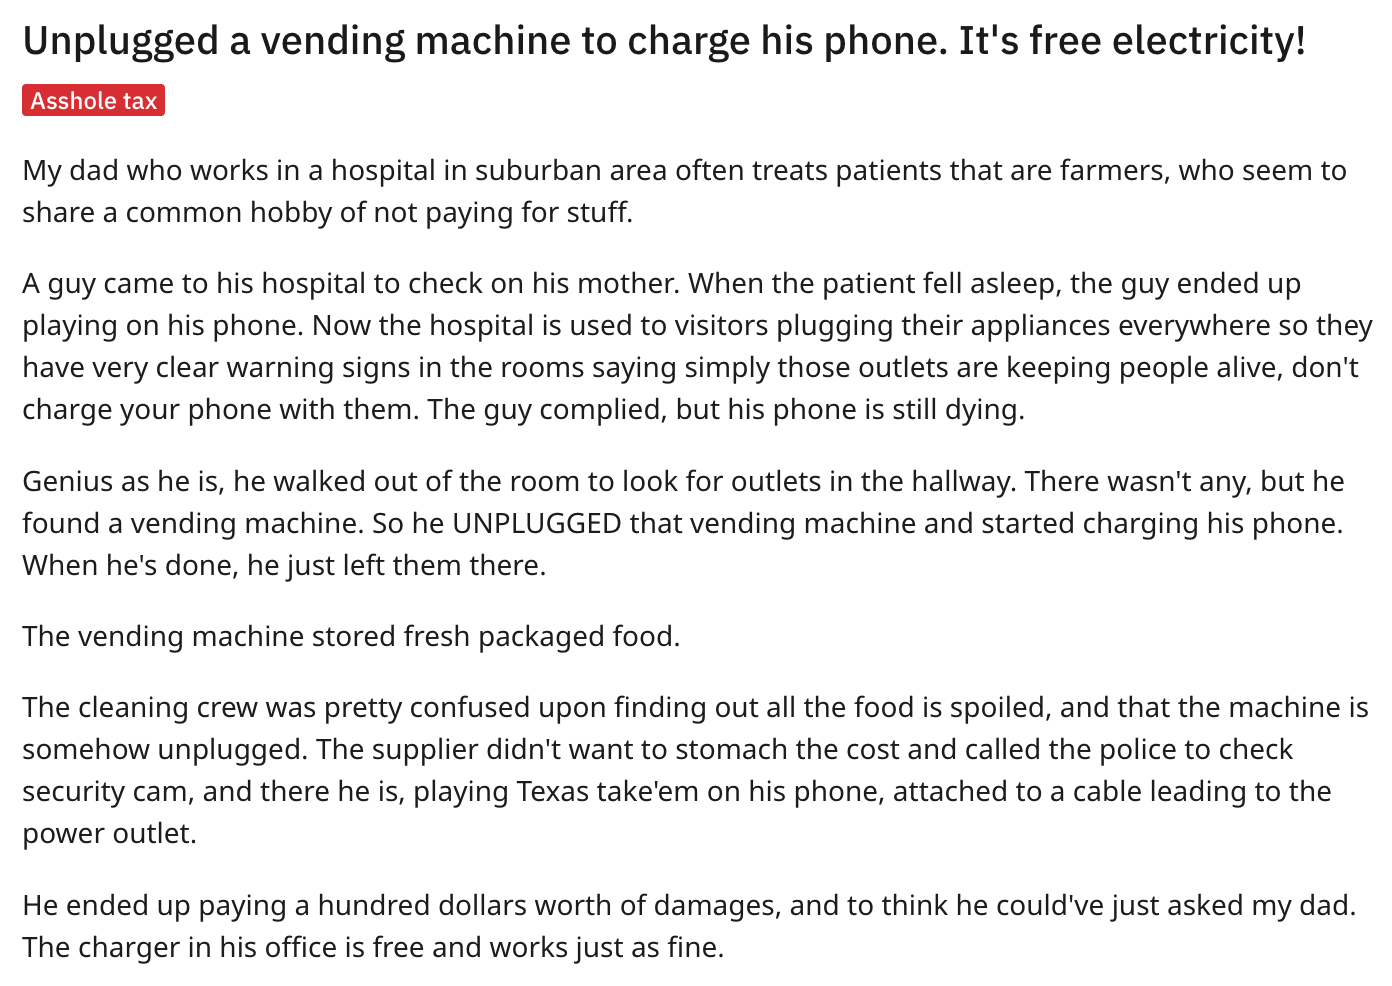 asshole tax - vending machine story